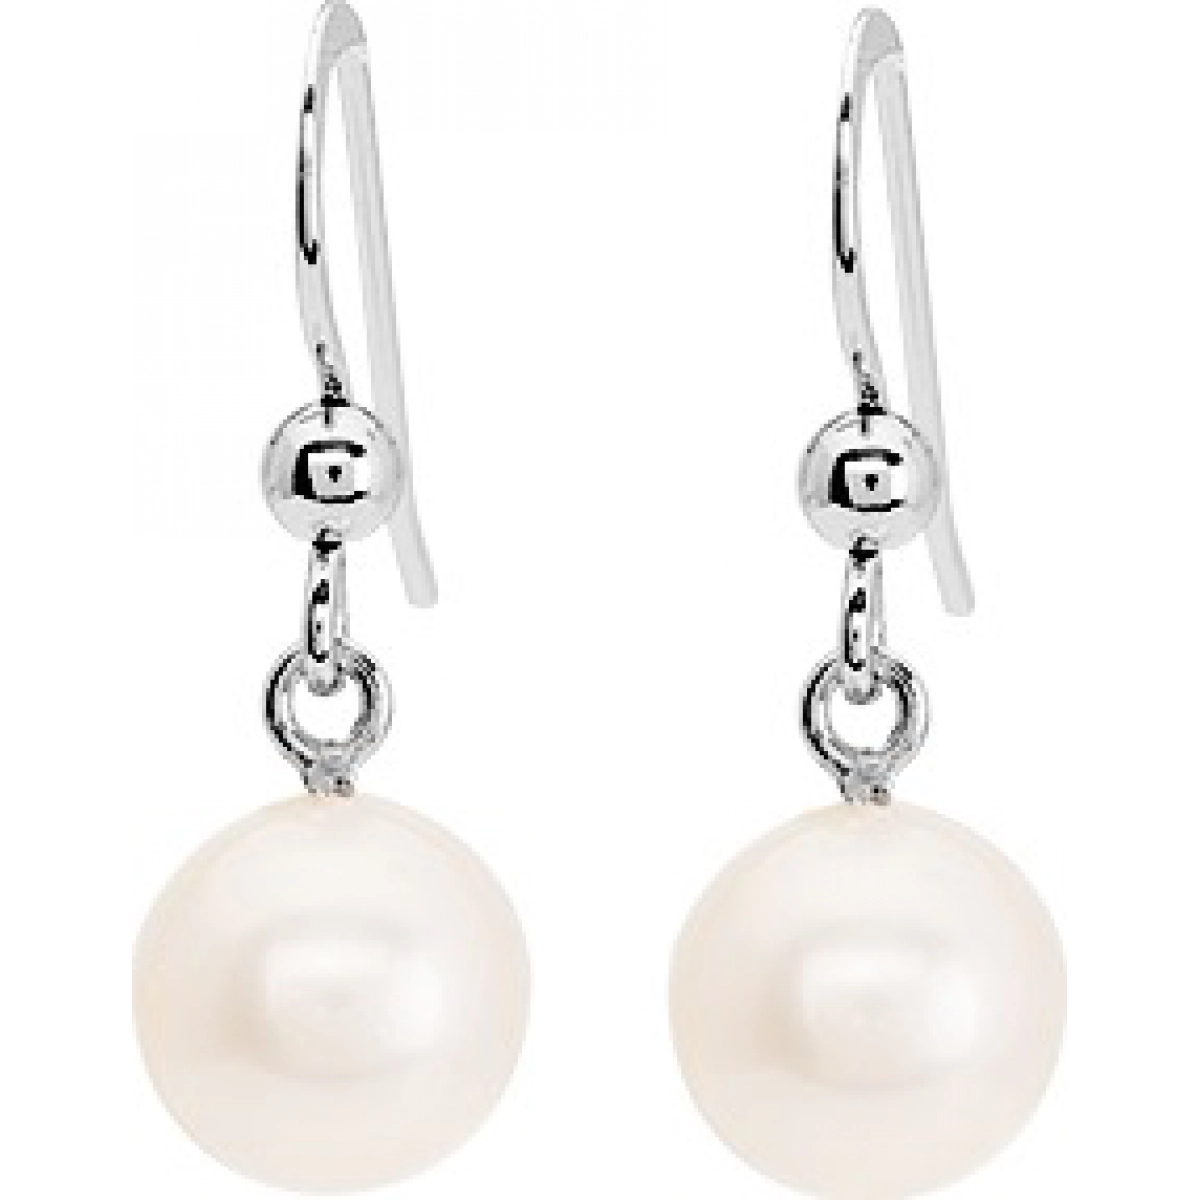 Earrings pair w. FW cult pearl rh925 Silver  Lua Blanca  335505.0